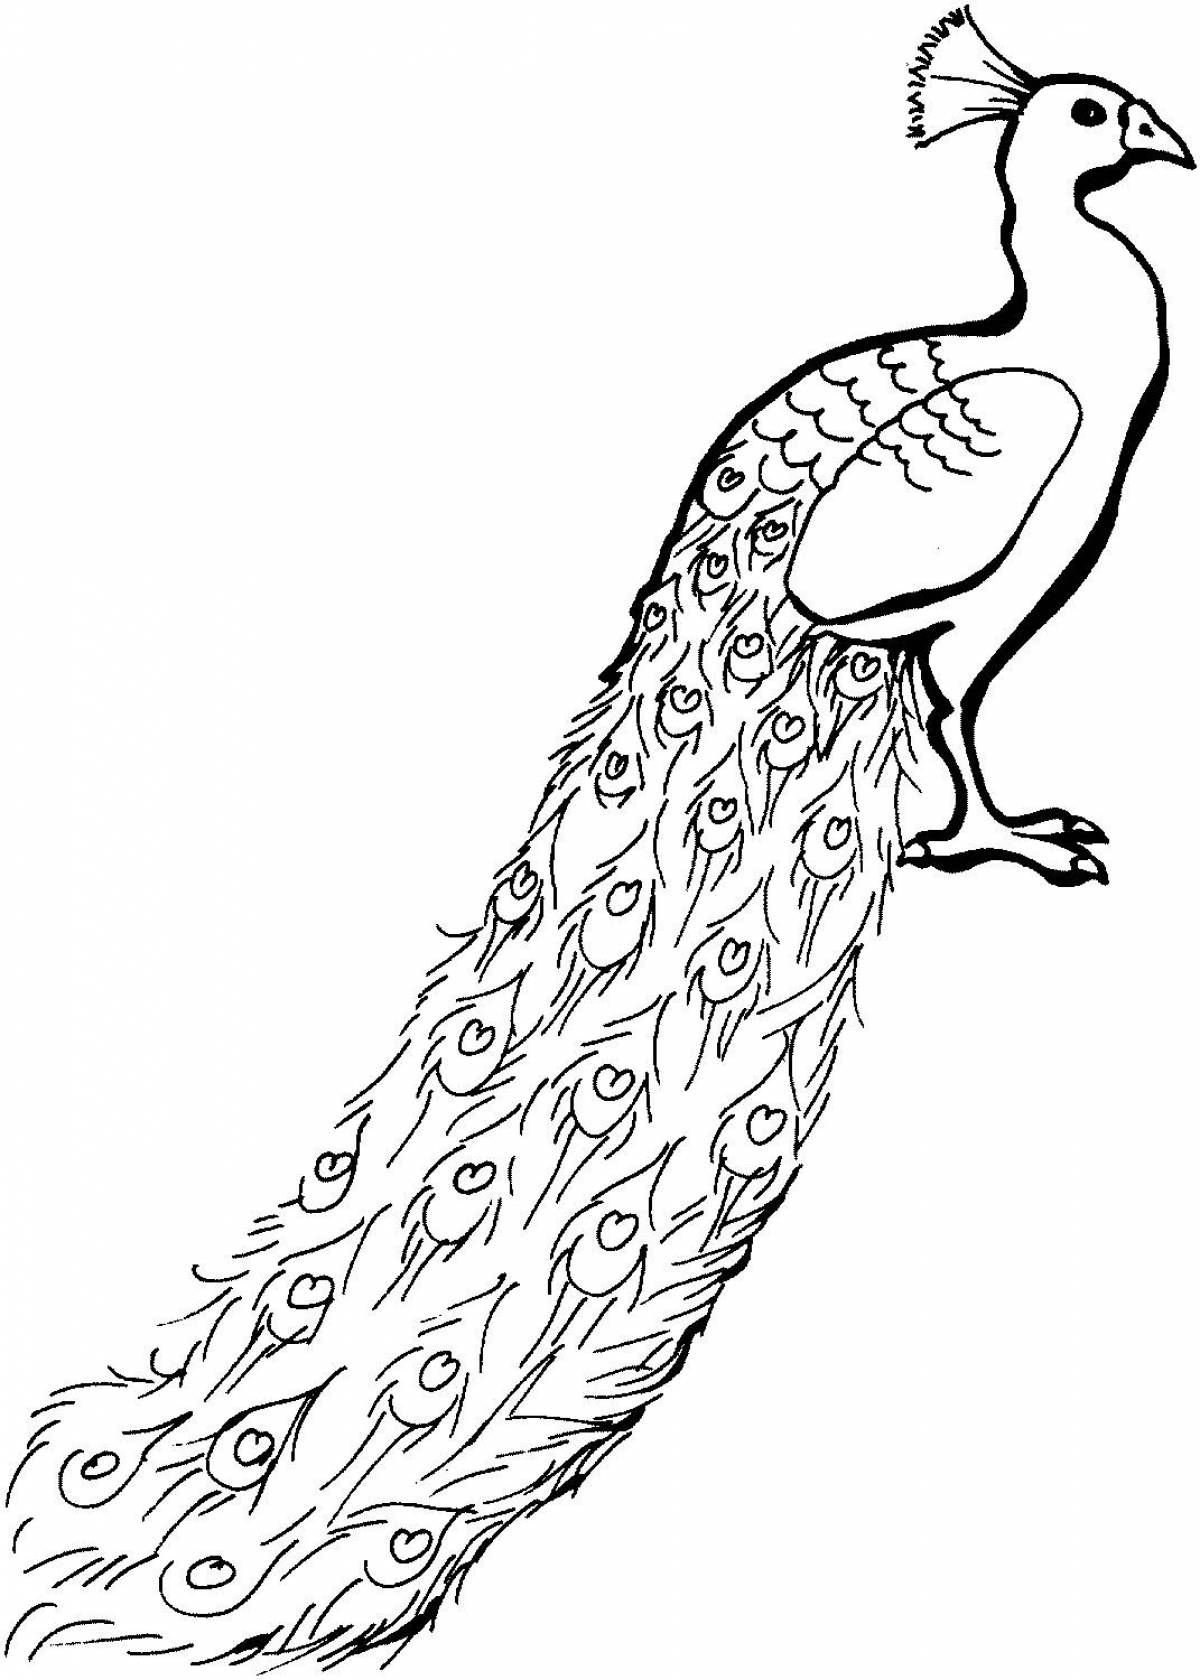 Peacock tail